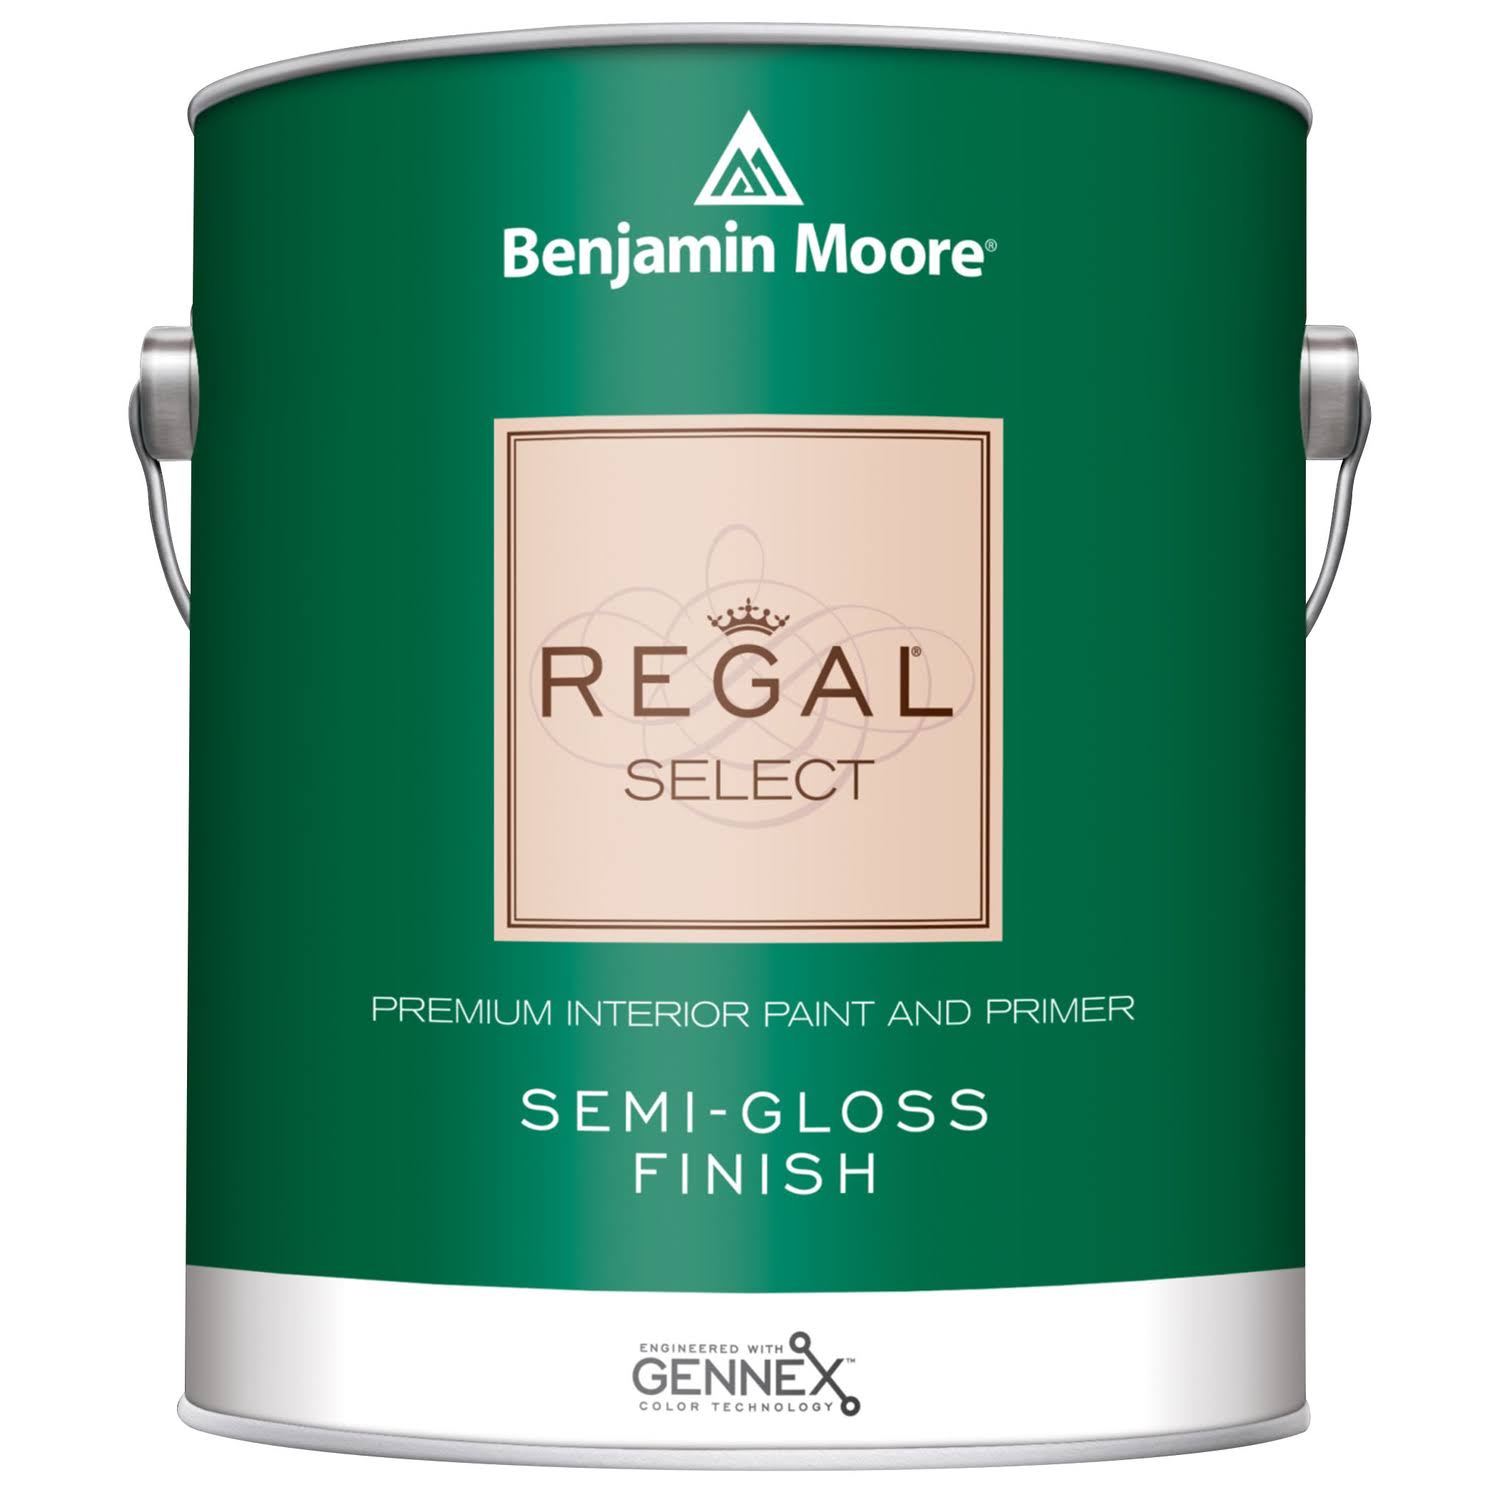 Benjamin Moore Regal Select Waterborne Interior Semi-Gloss Finish